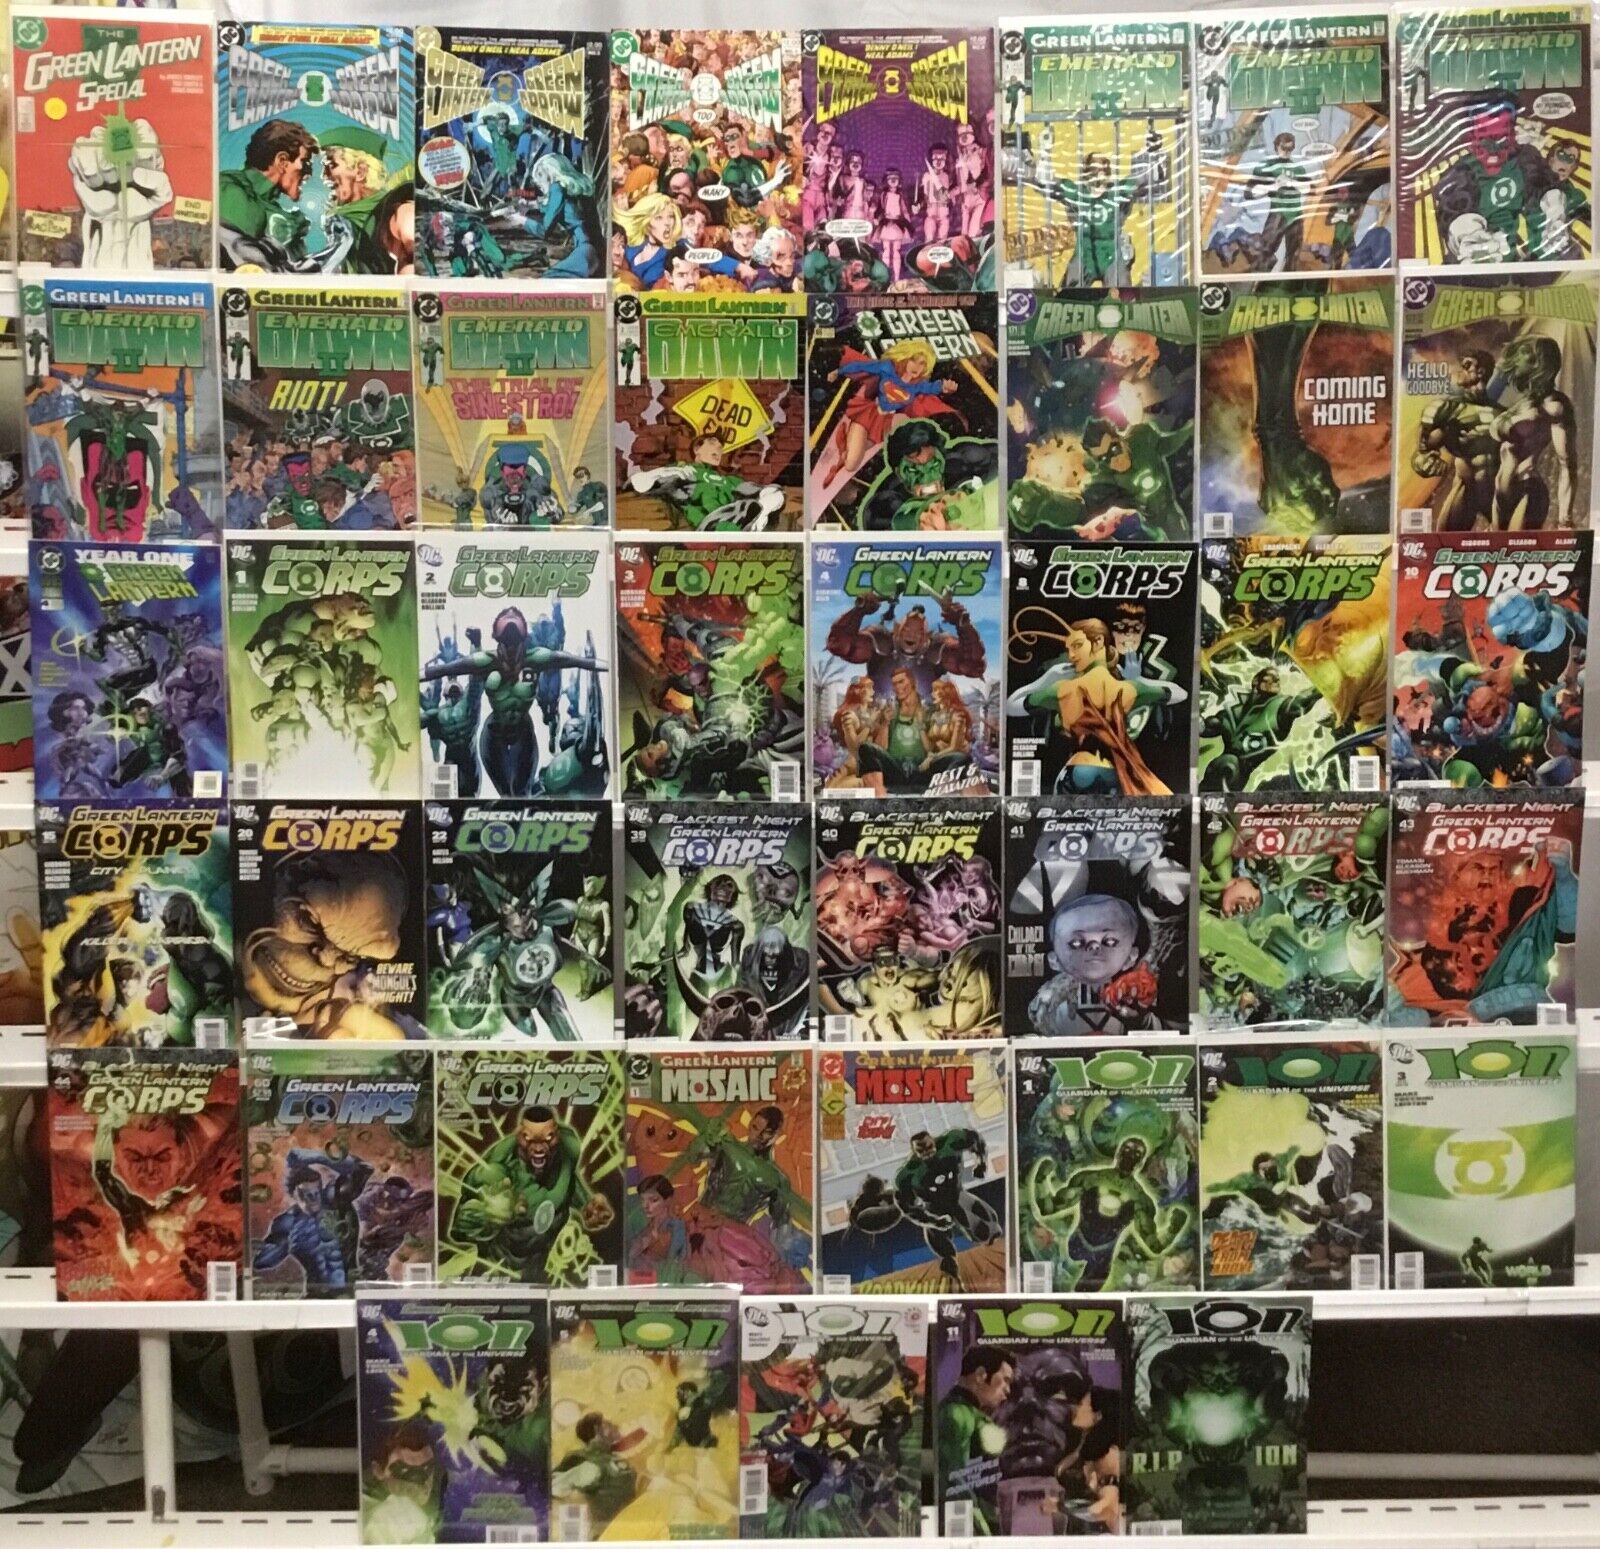 DC Comics Green Lantern Comic Book Lot of 45 Issues Corps, ION, Mosaic, Emerald